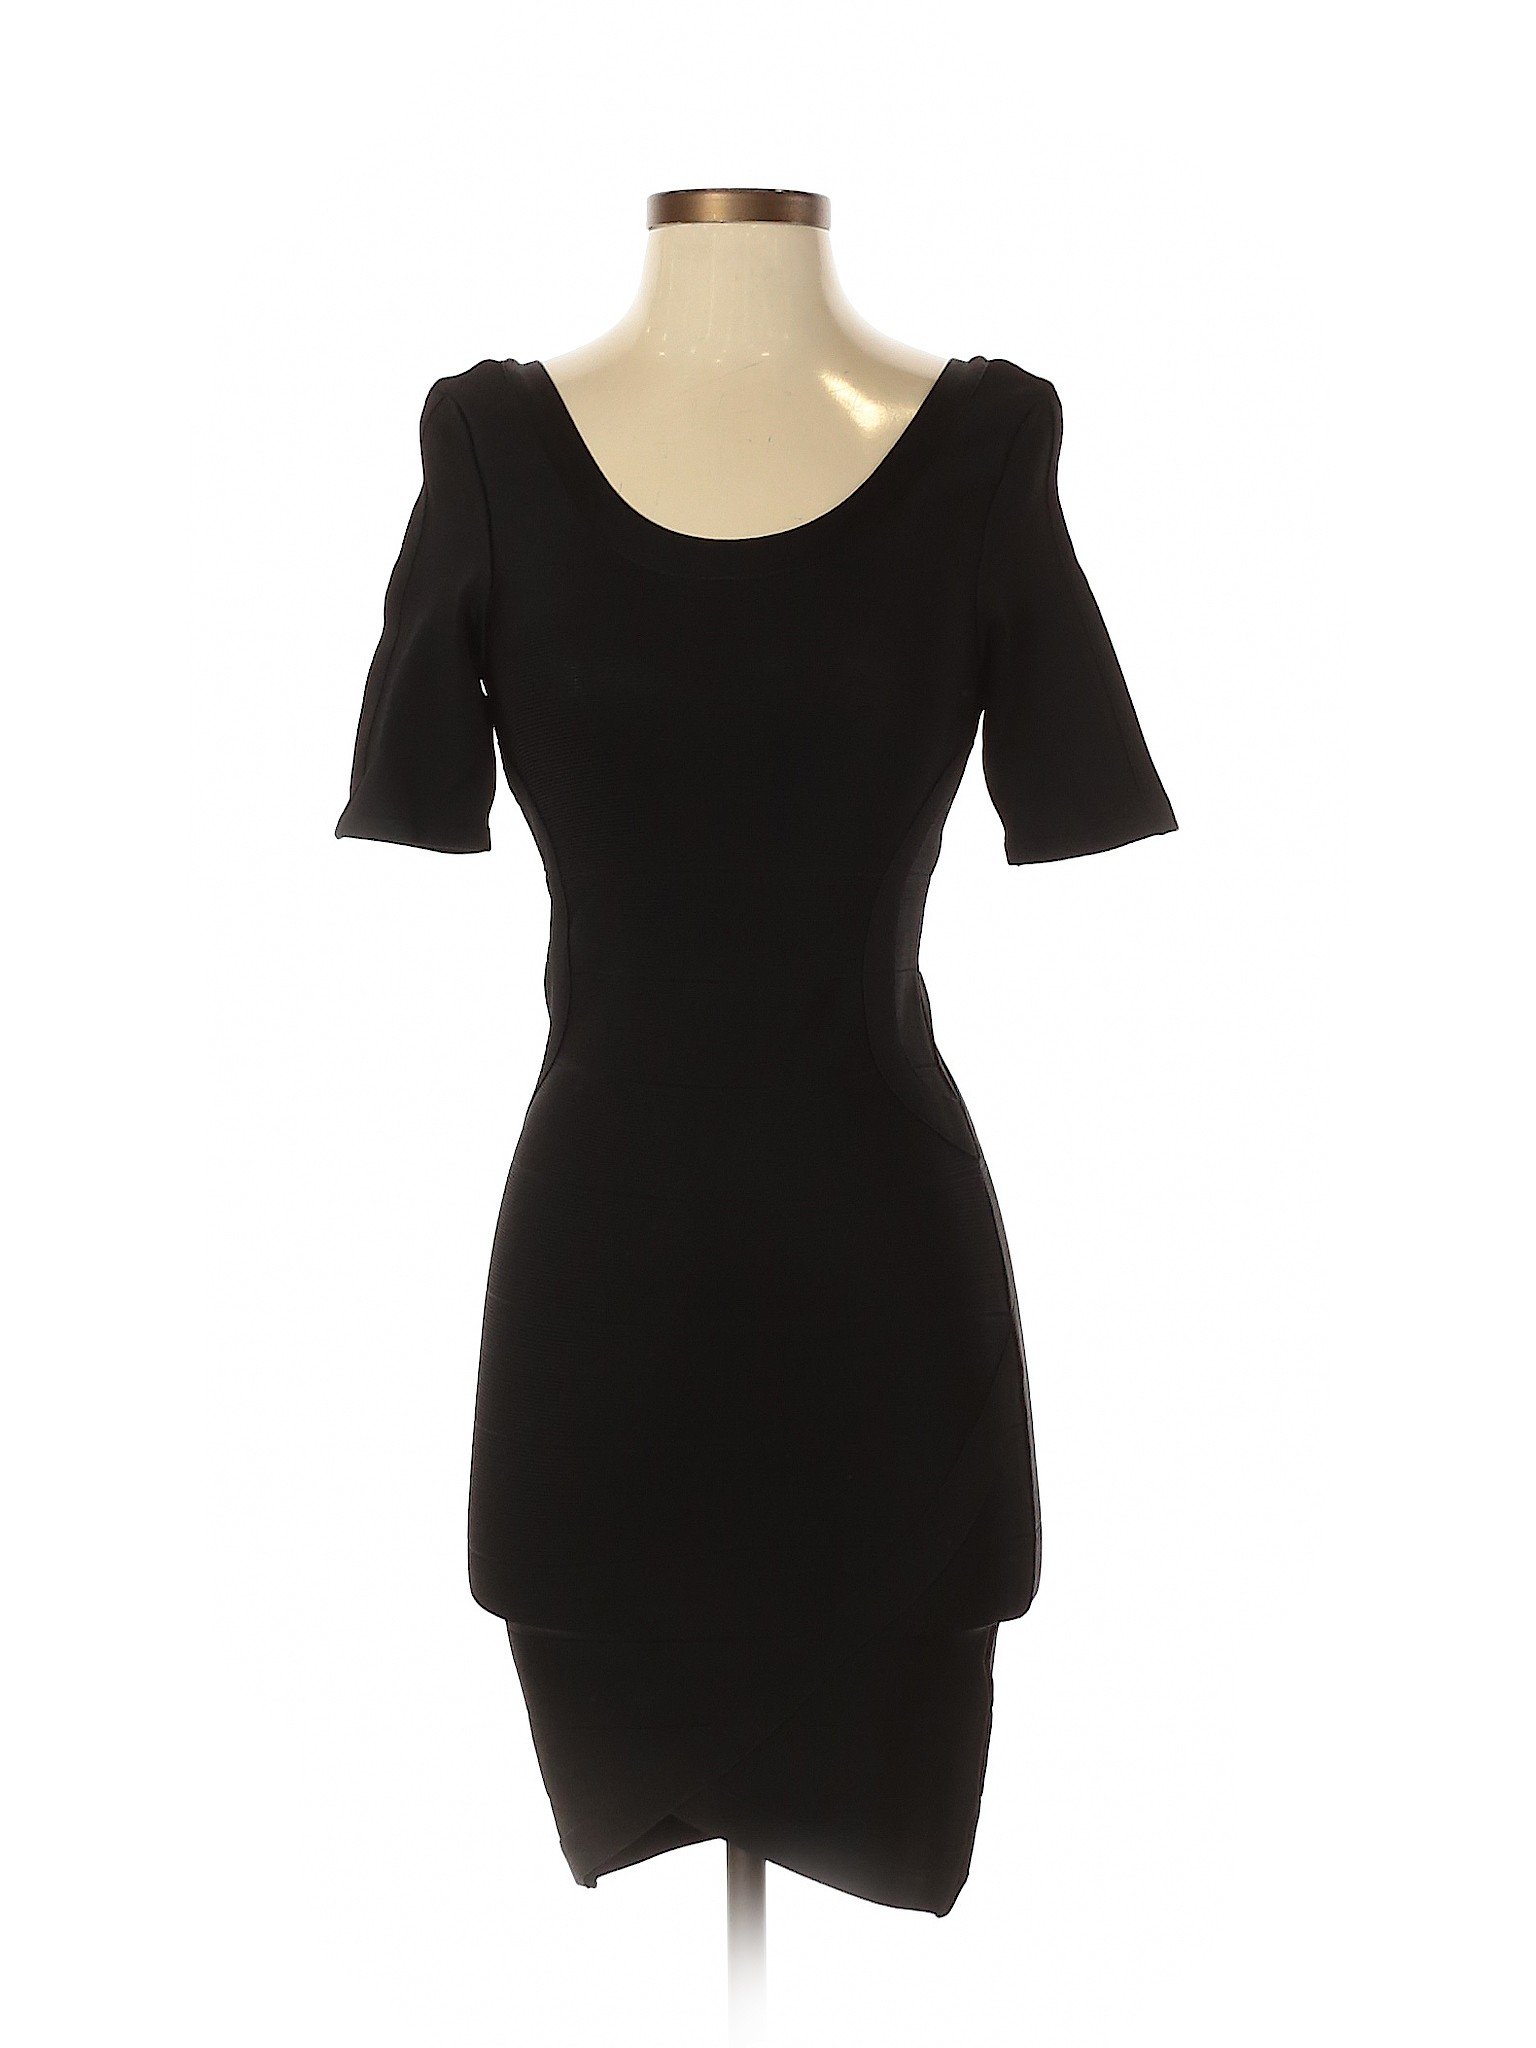 Bebe Women Black Cocktail Dress S | eBay